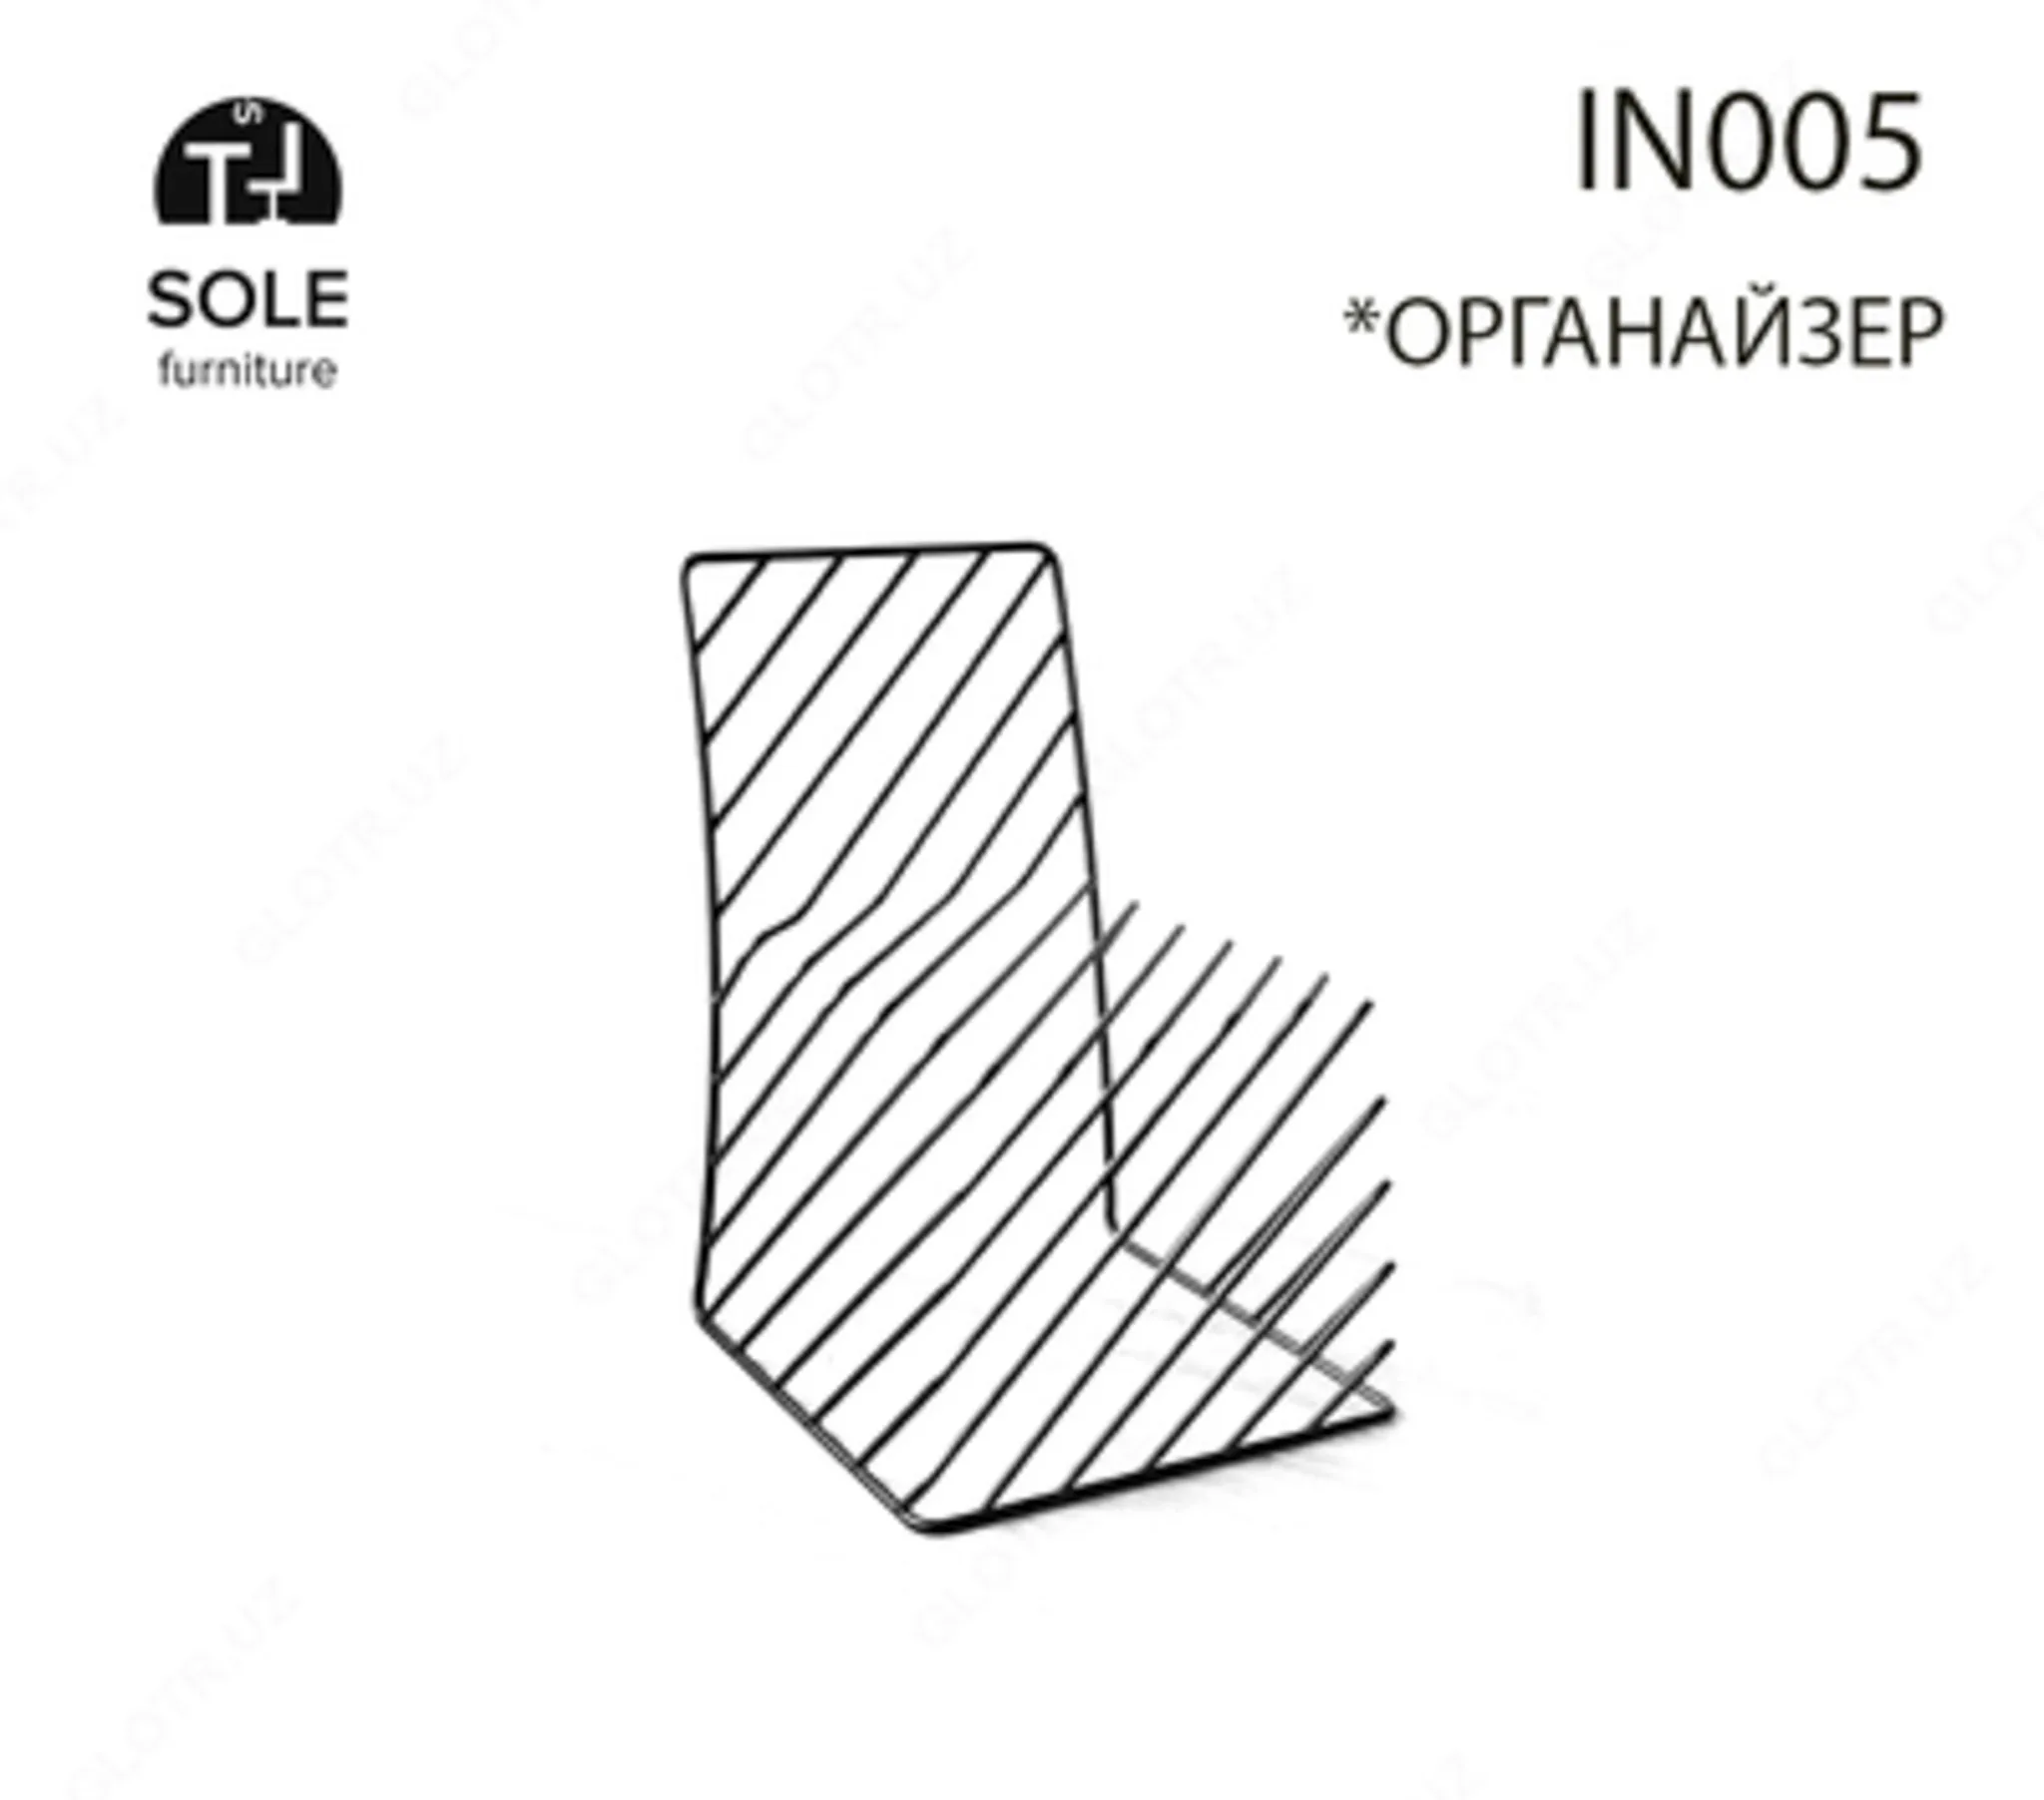 Органайзер, модель "IN005"#1